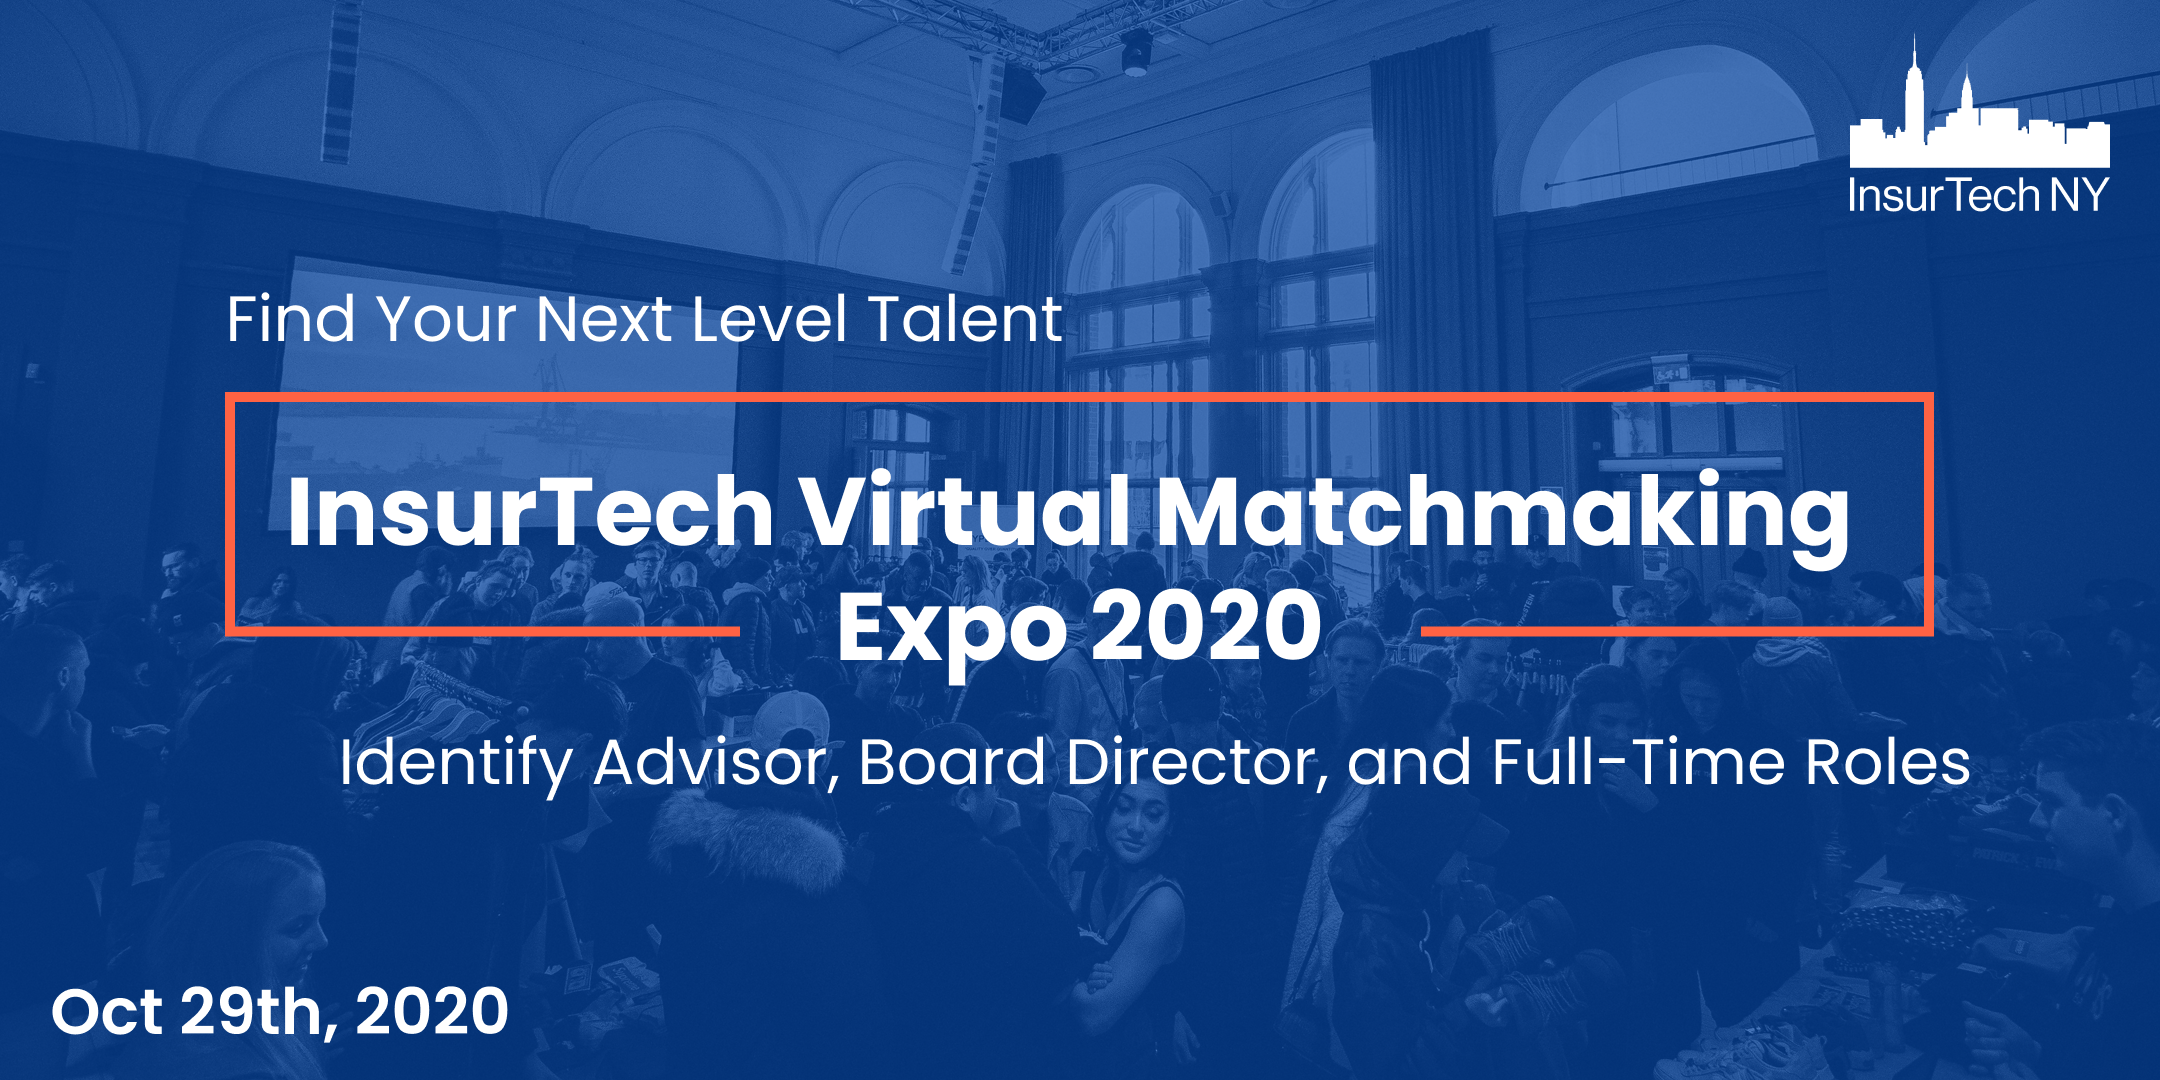 InsurTech Virtual Matchmaking Expo 2020